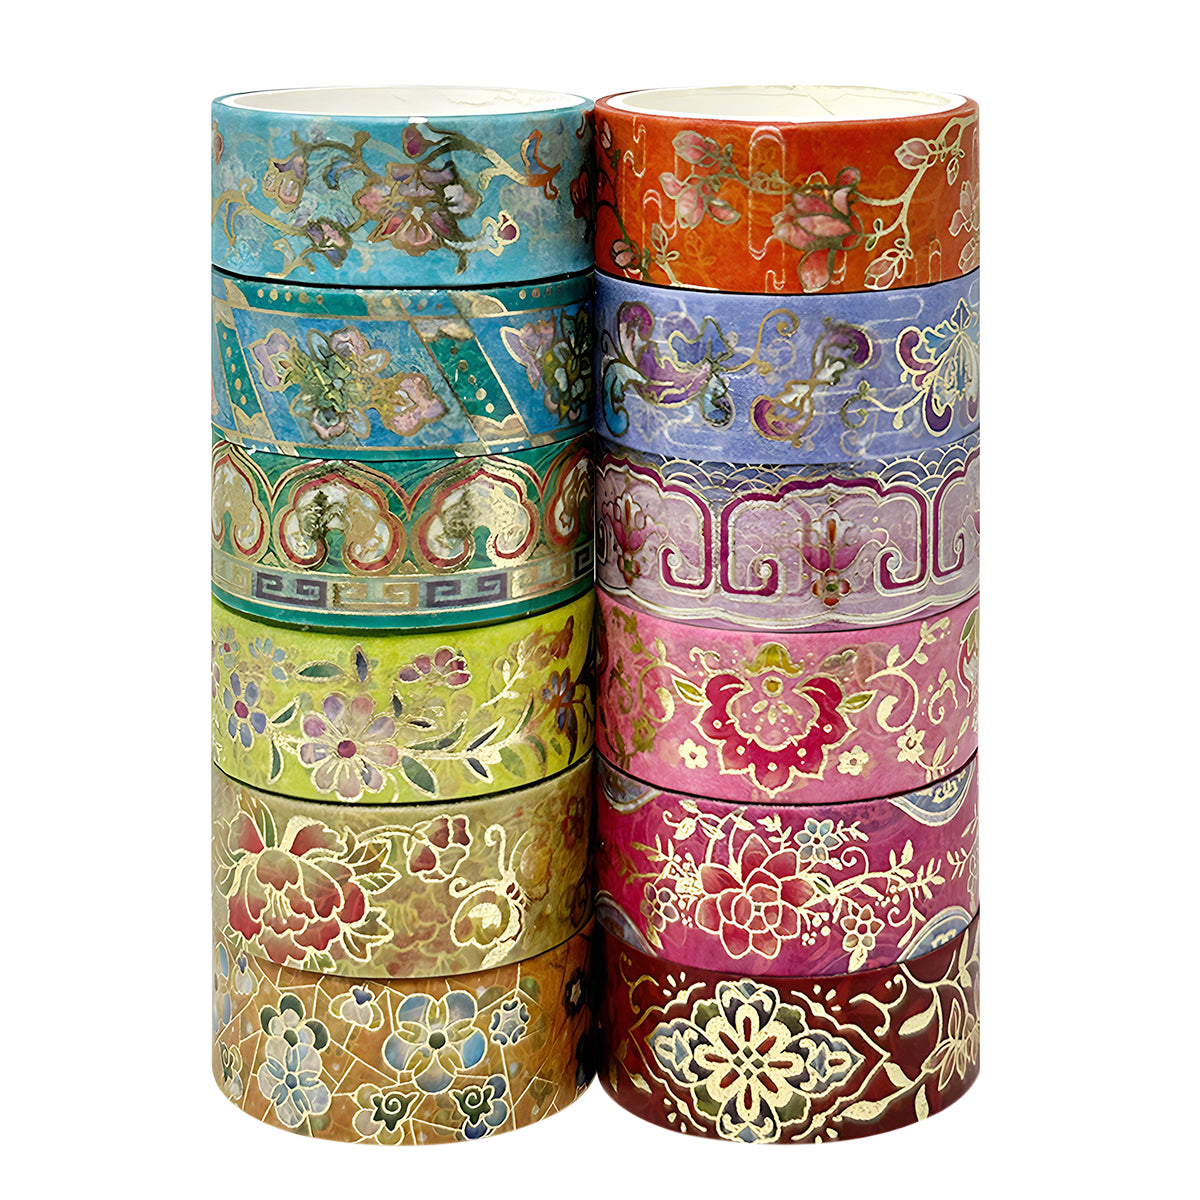 Idyllic Grace - Washi Tape Set - Rose Gold Foil - Christian - Decorative Scrapbook Tape - Craft Tape - Bullet Journal Supplies - Bible Journaling 